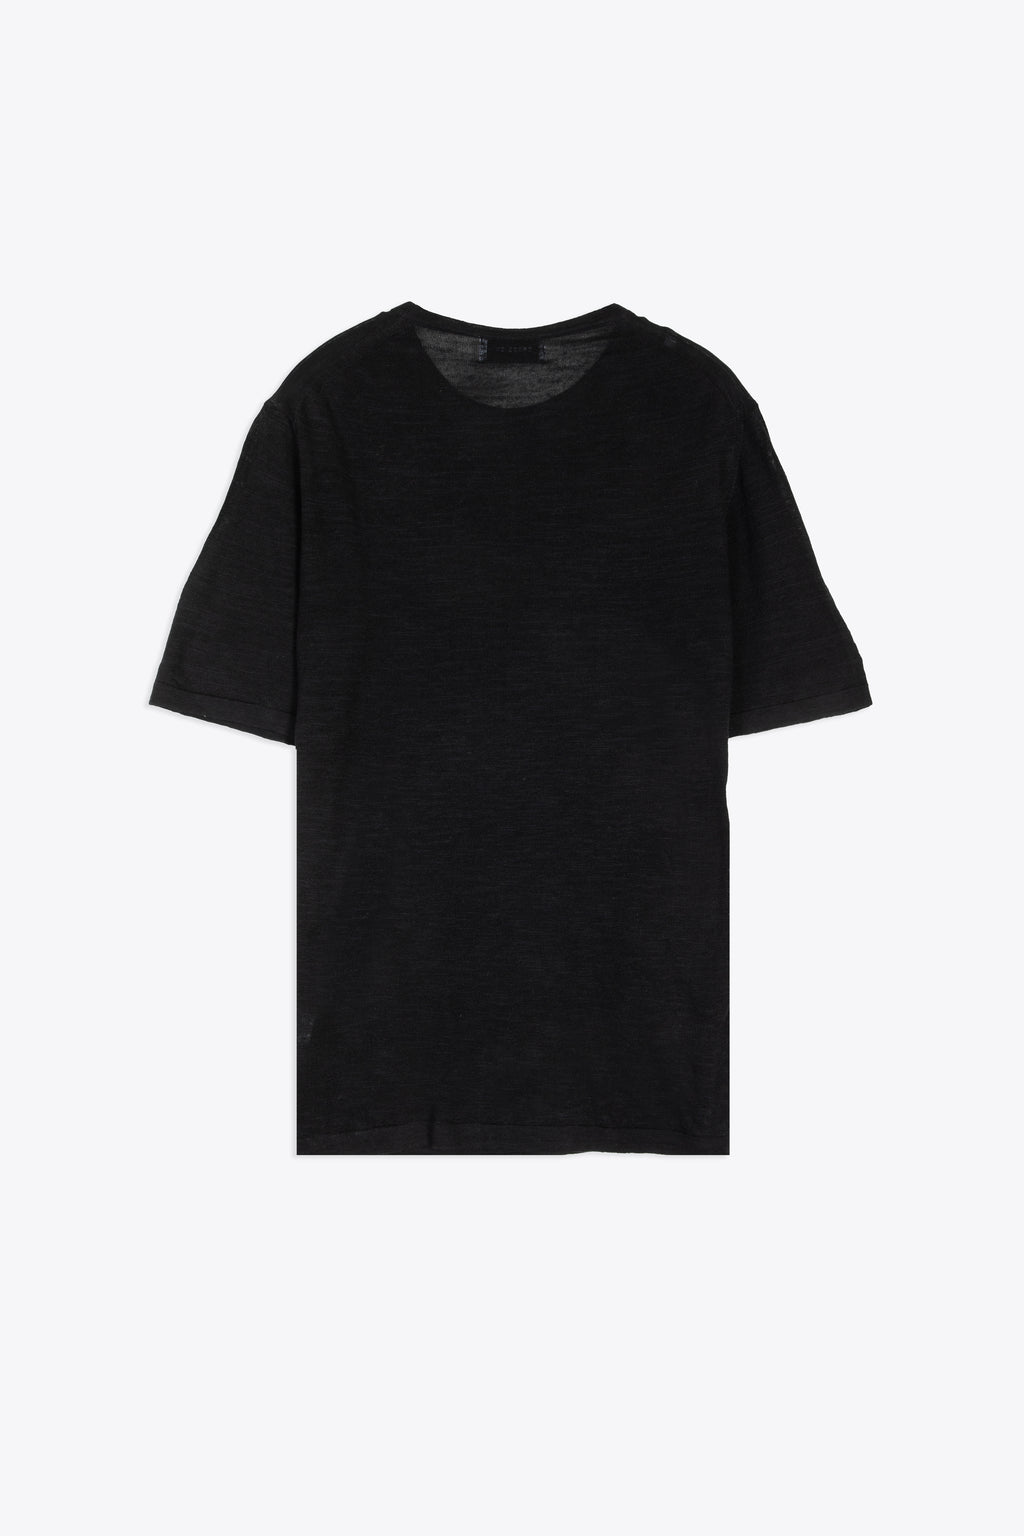 alt-image__Black-linen-blend-t-shirt